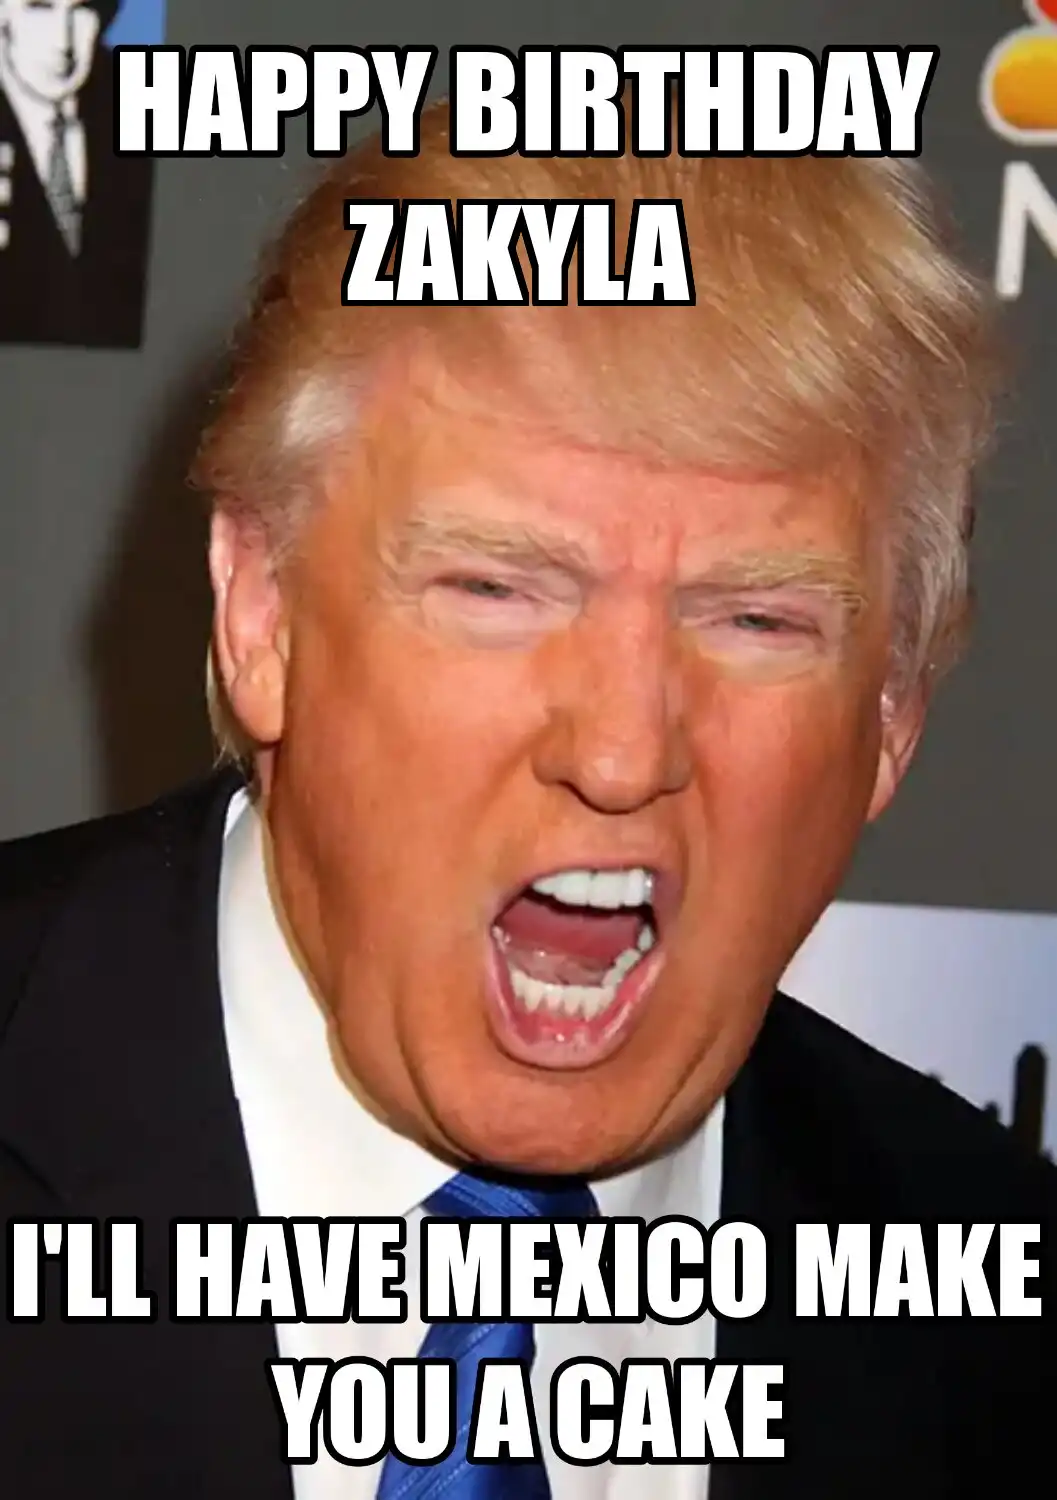 Happy Birthday Zakyla Mexico Make You A Cake Meme